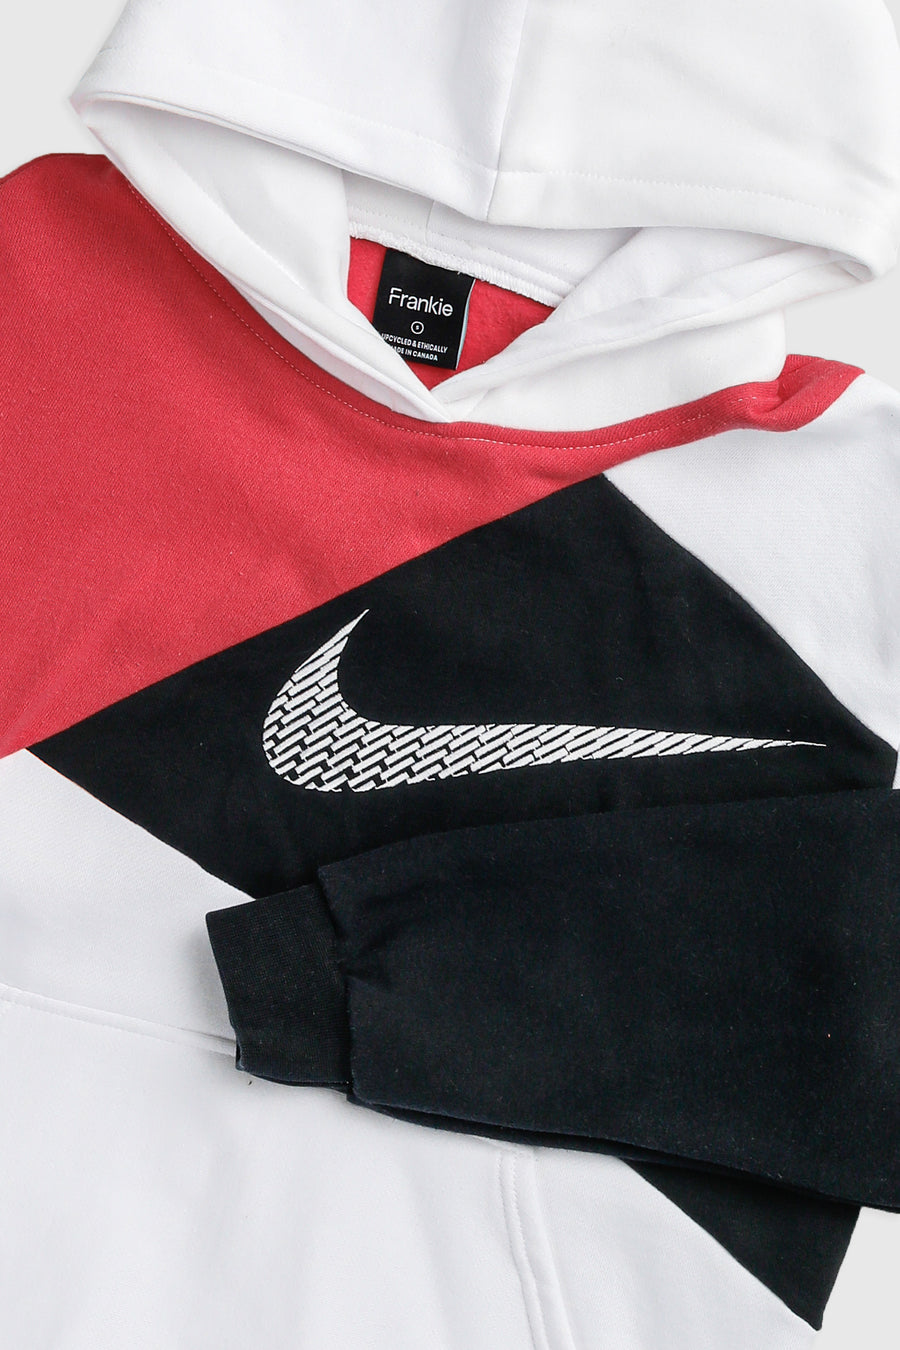 Rework Nike Patchwork Sweatshirt - S